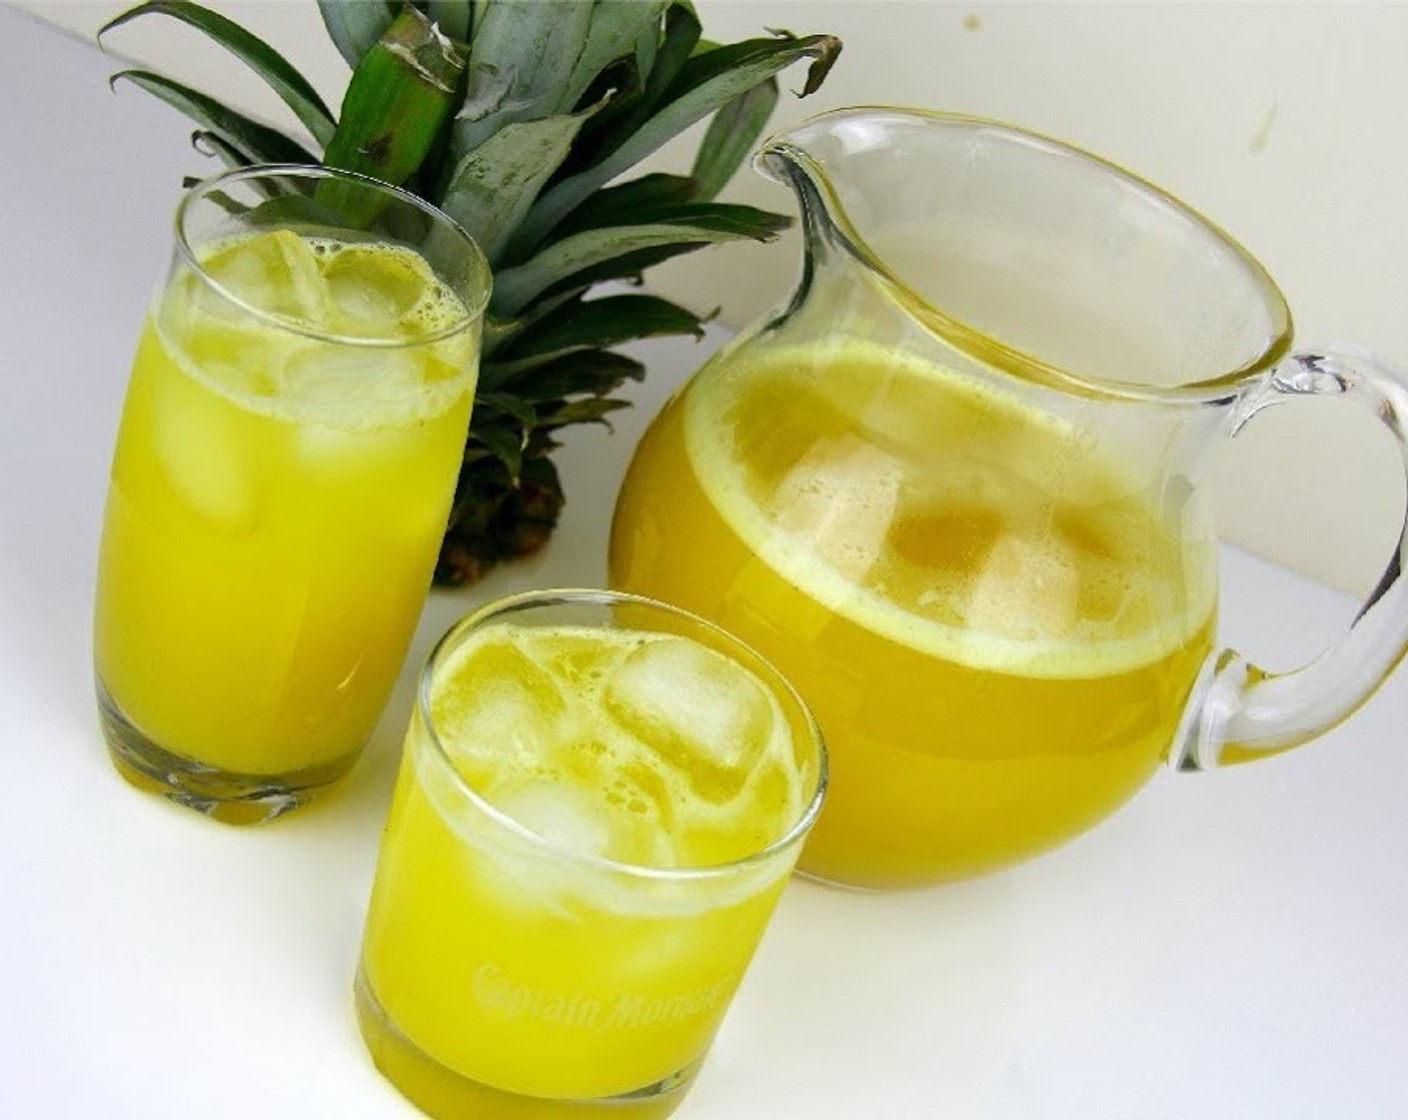 Traditional Caribbean Pineapple Juice